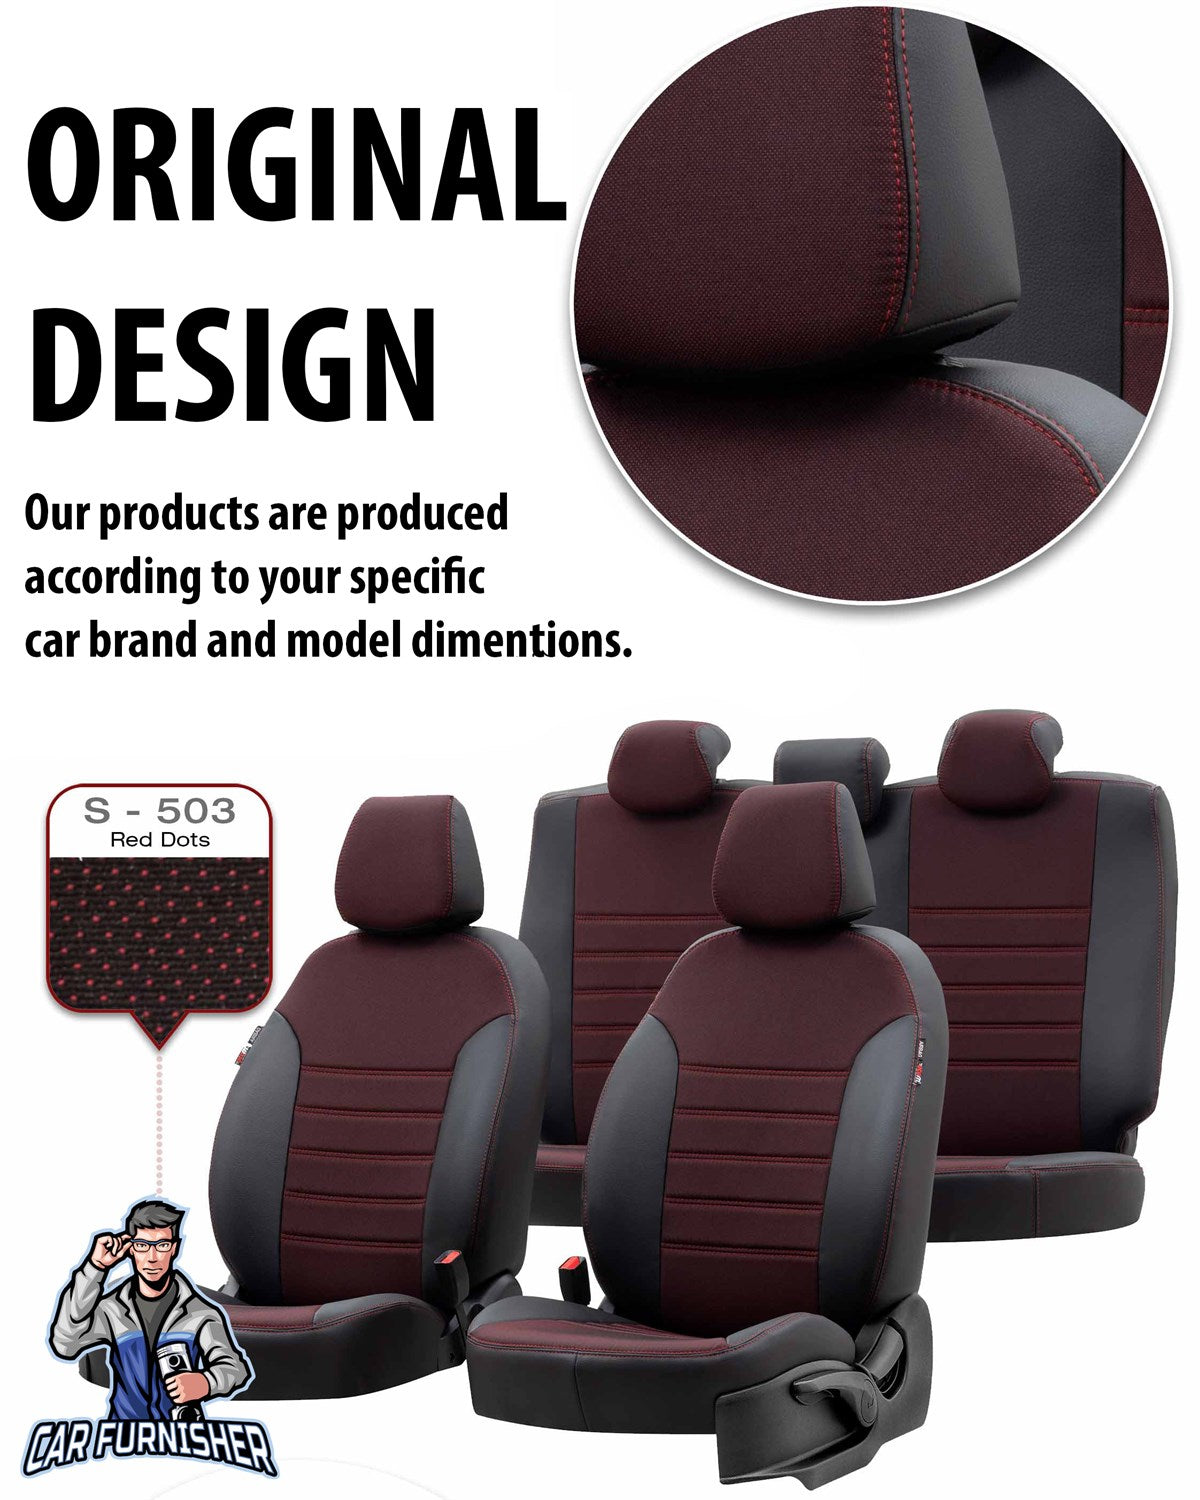 Alfa Romeo Giulietta Seat Cover Paris Leather & Jacquard Design Black Leather & Jacquard Fabric